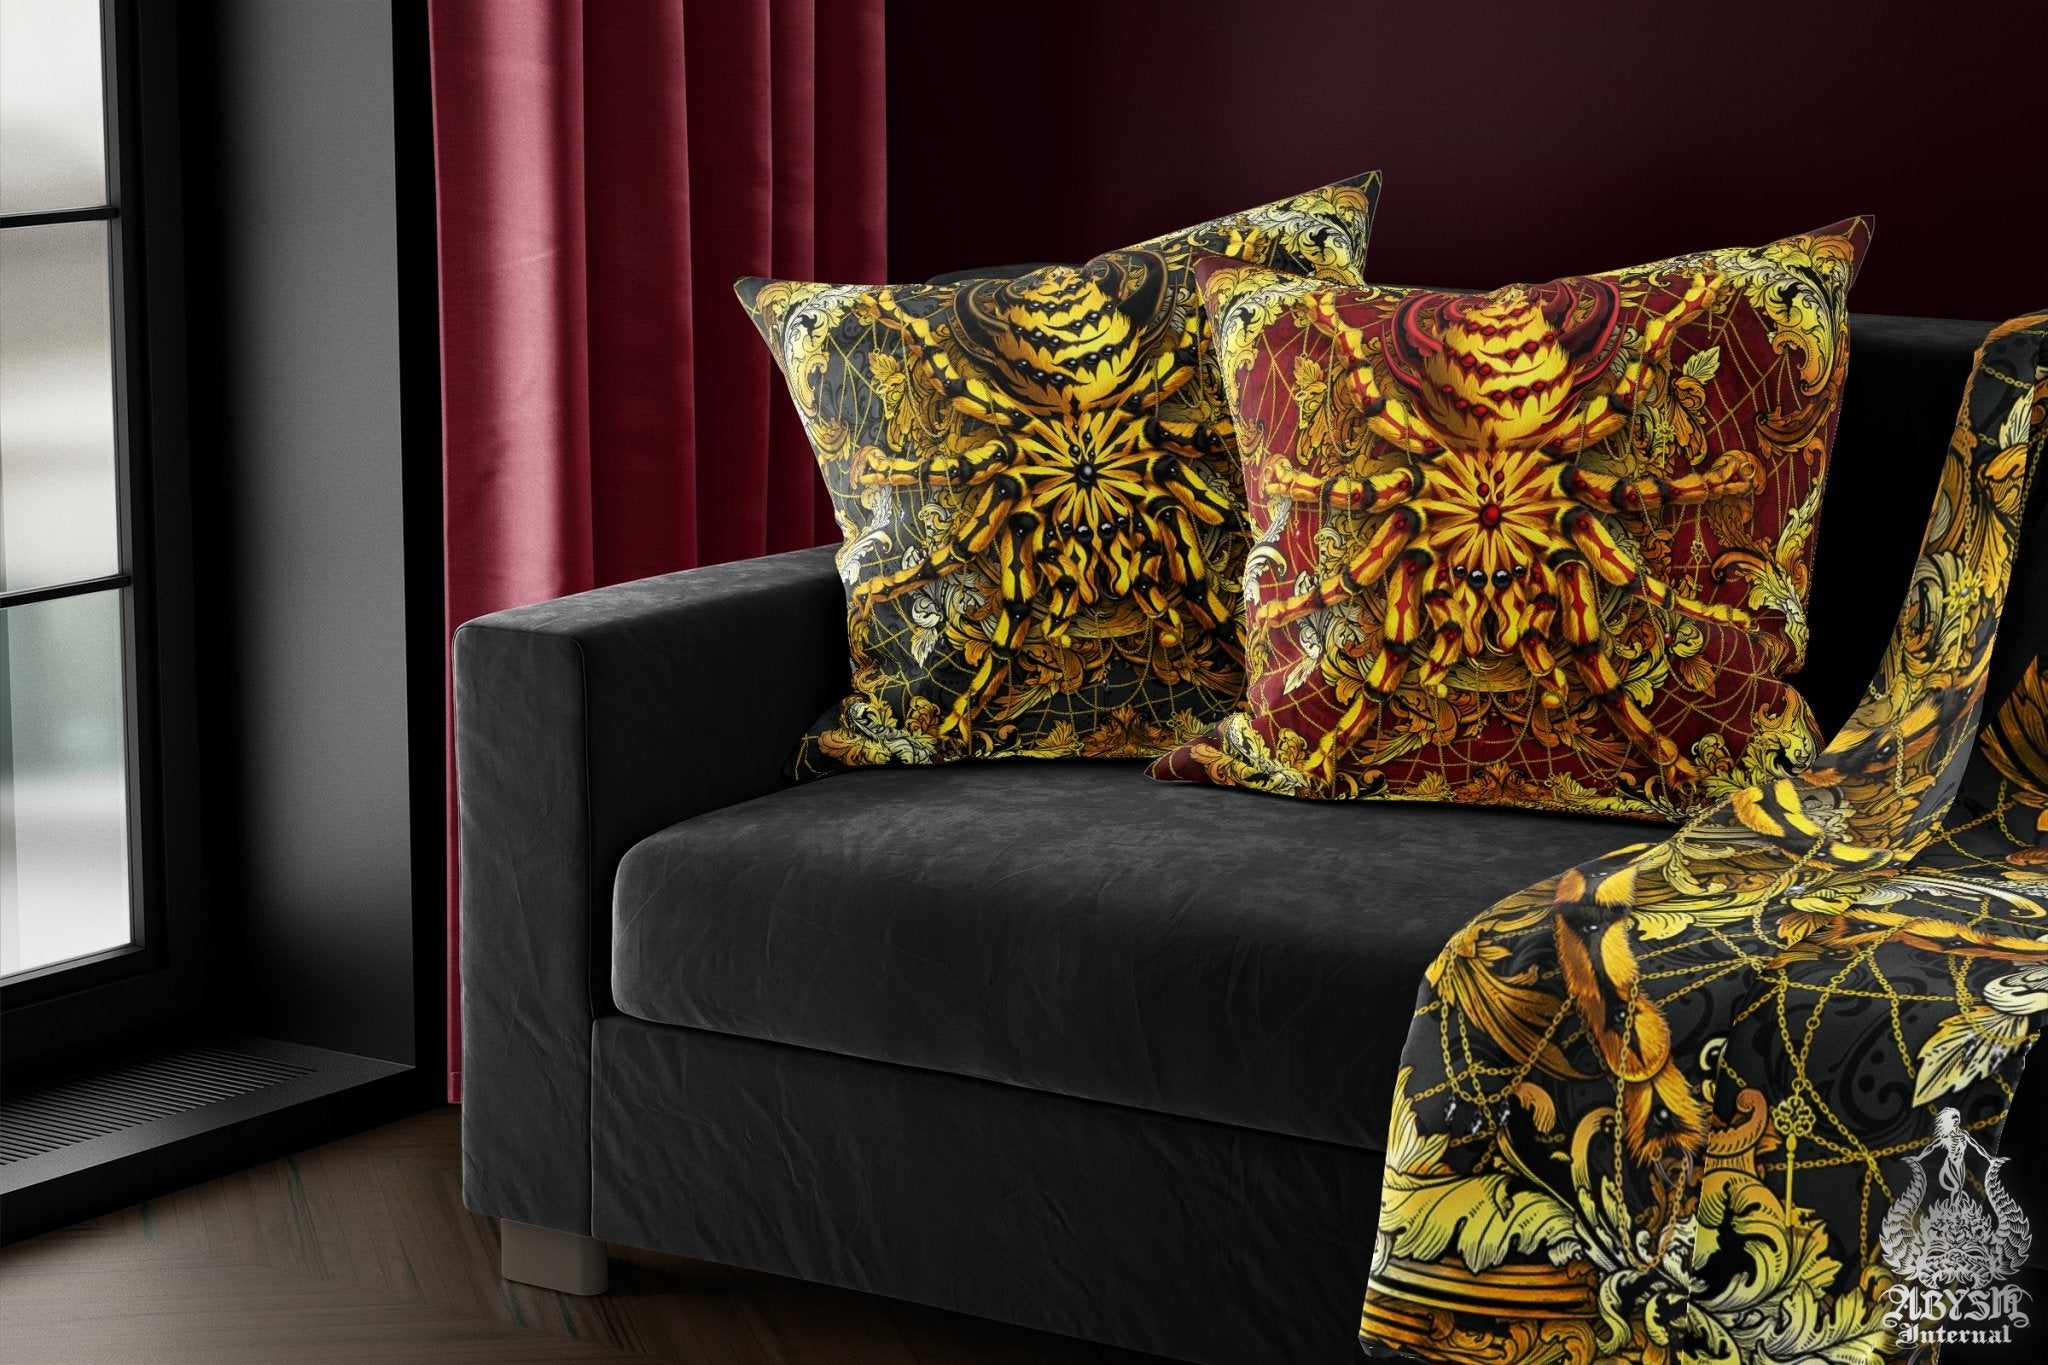 Spider Throw Pillow, Decorative Accent Cushion, Eclectic Room Decor, Alternative Home - Tarantula, Gold Black - Abysm Internal